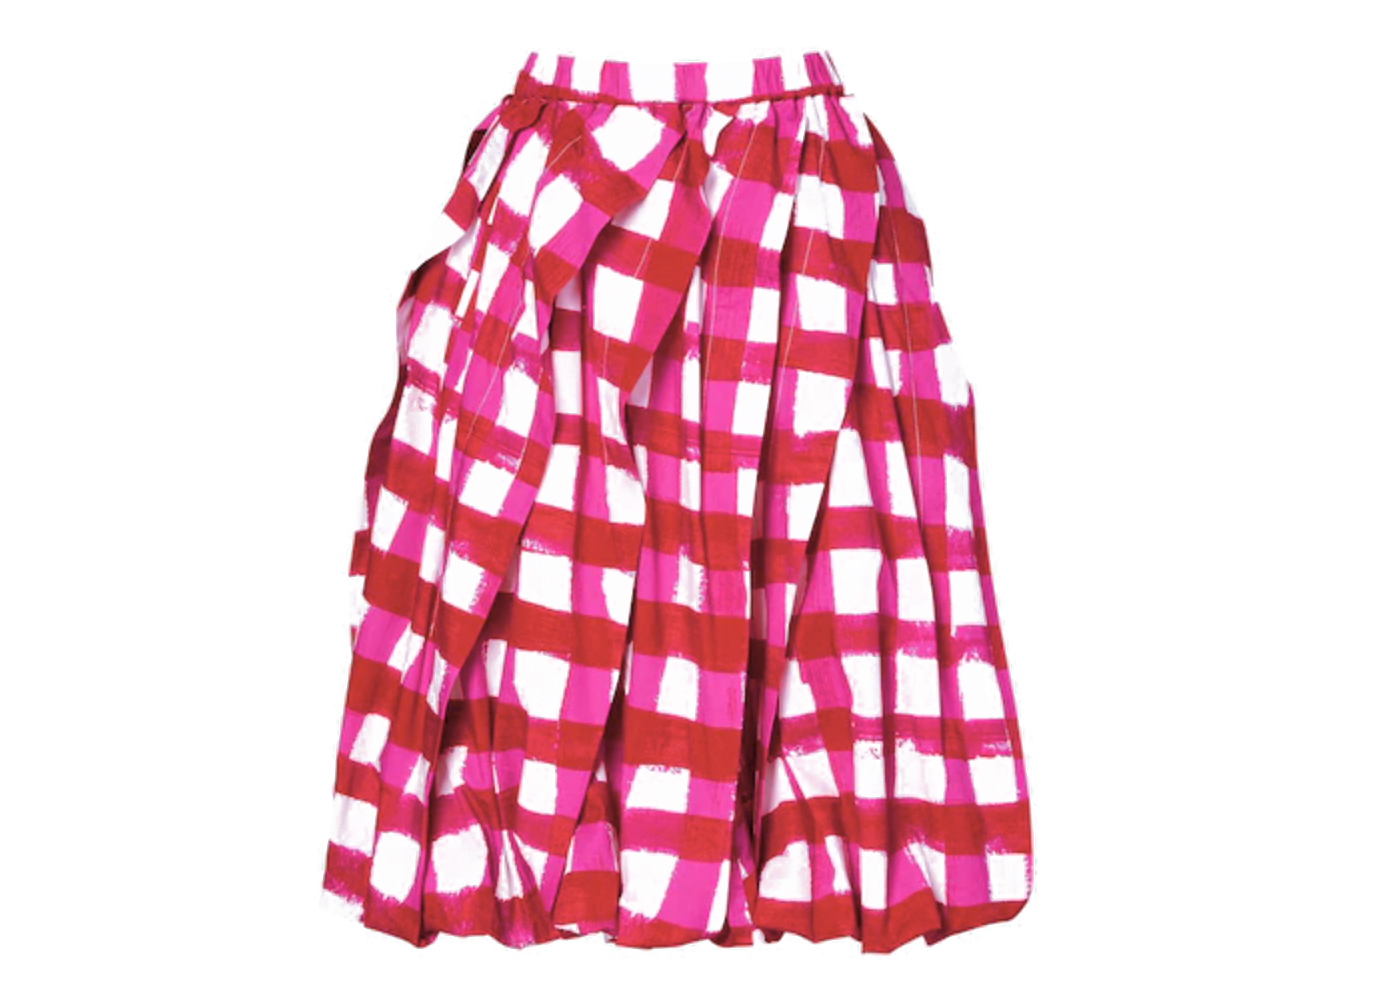 Uniqlo x MARNI Women's Balloon Shape Check Skirt (Asia Sizing 